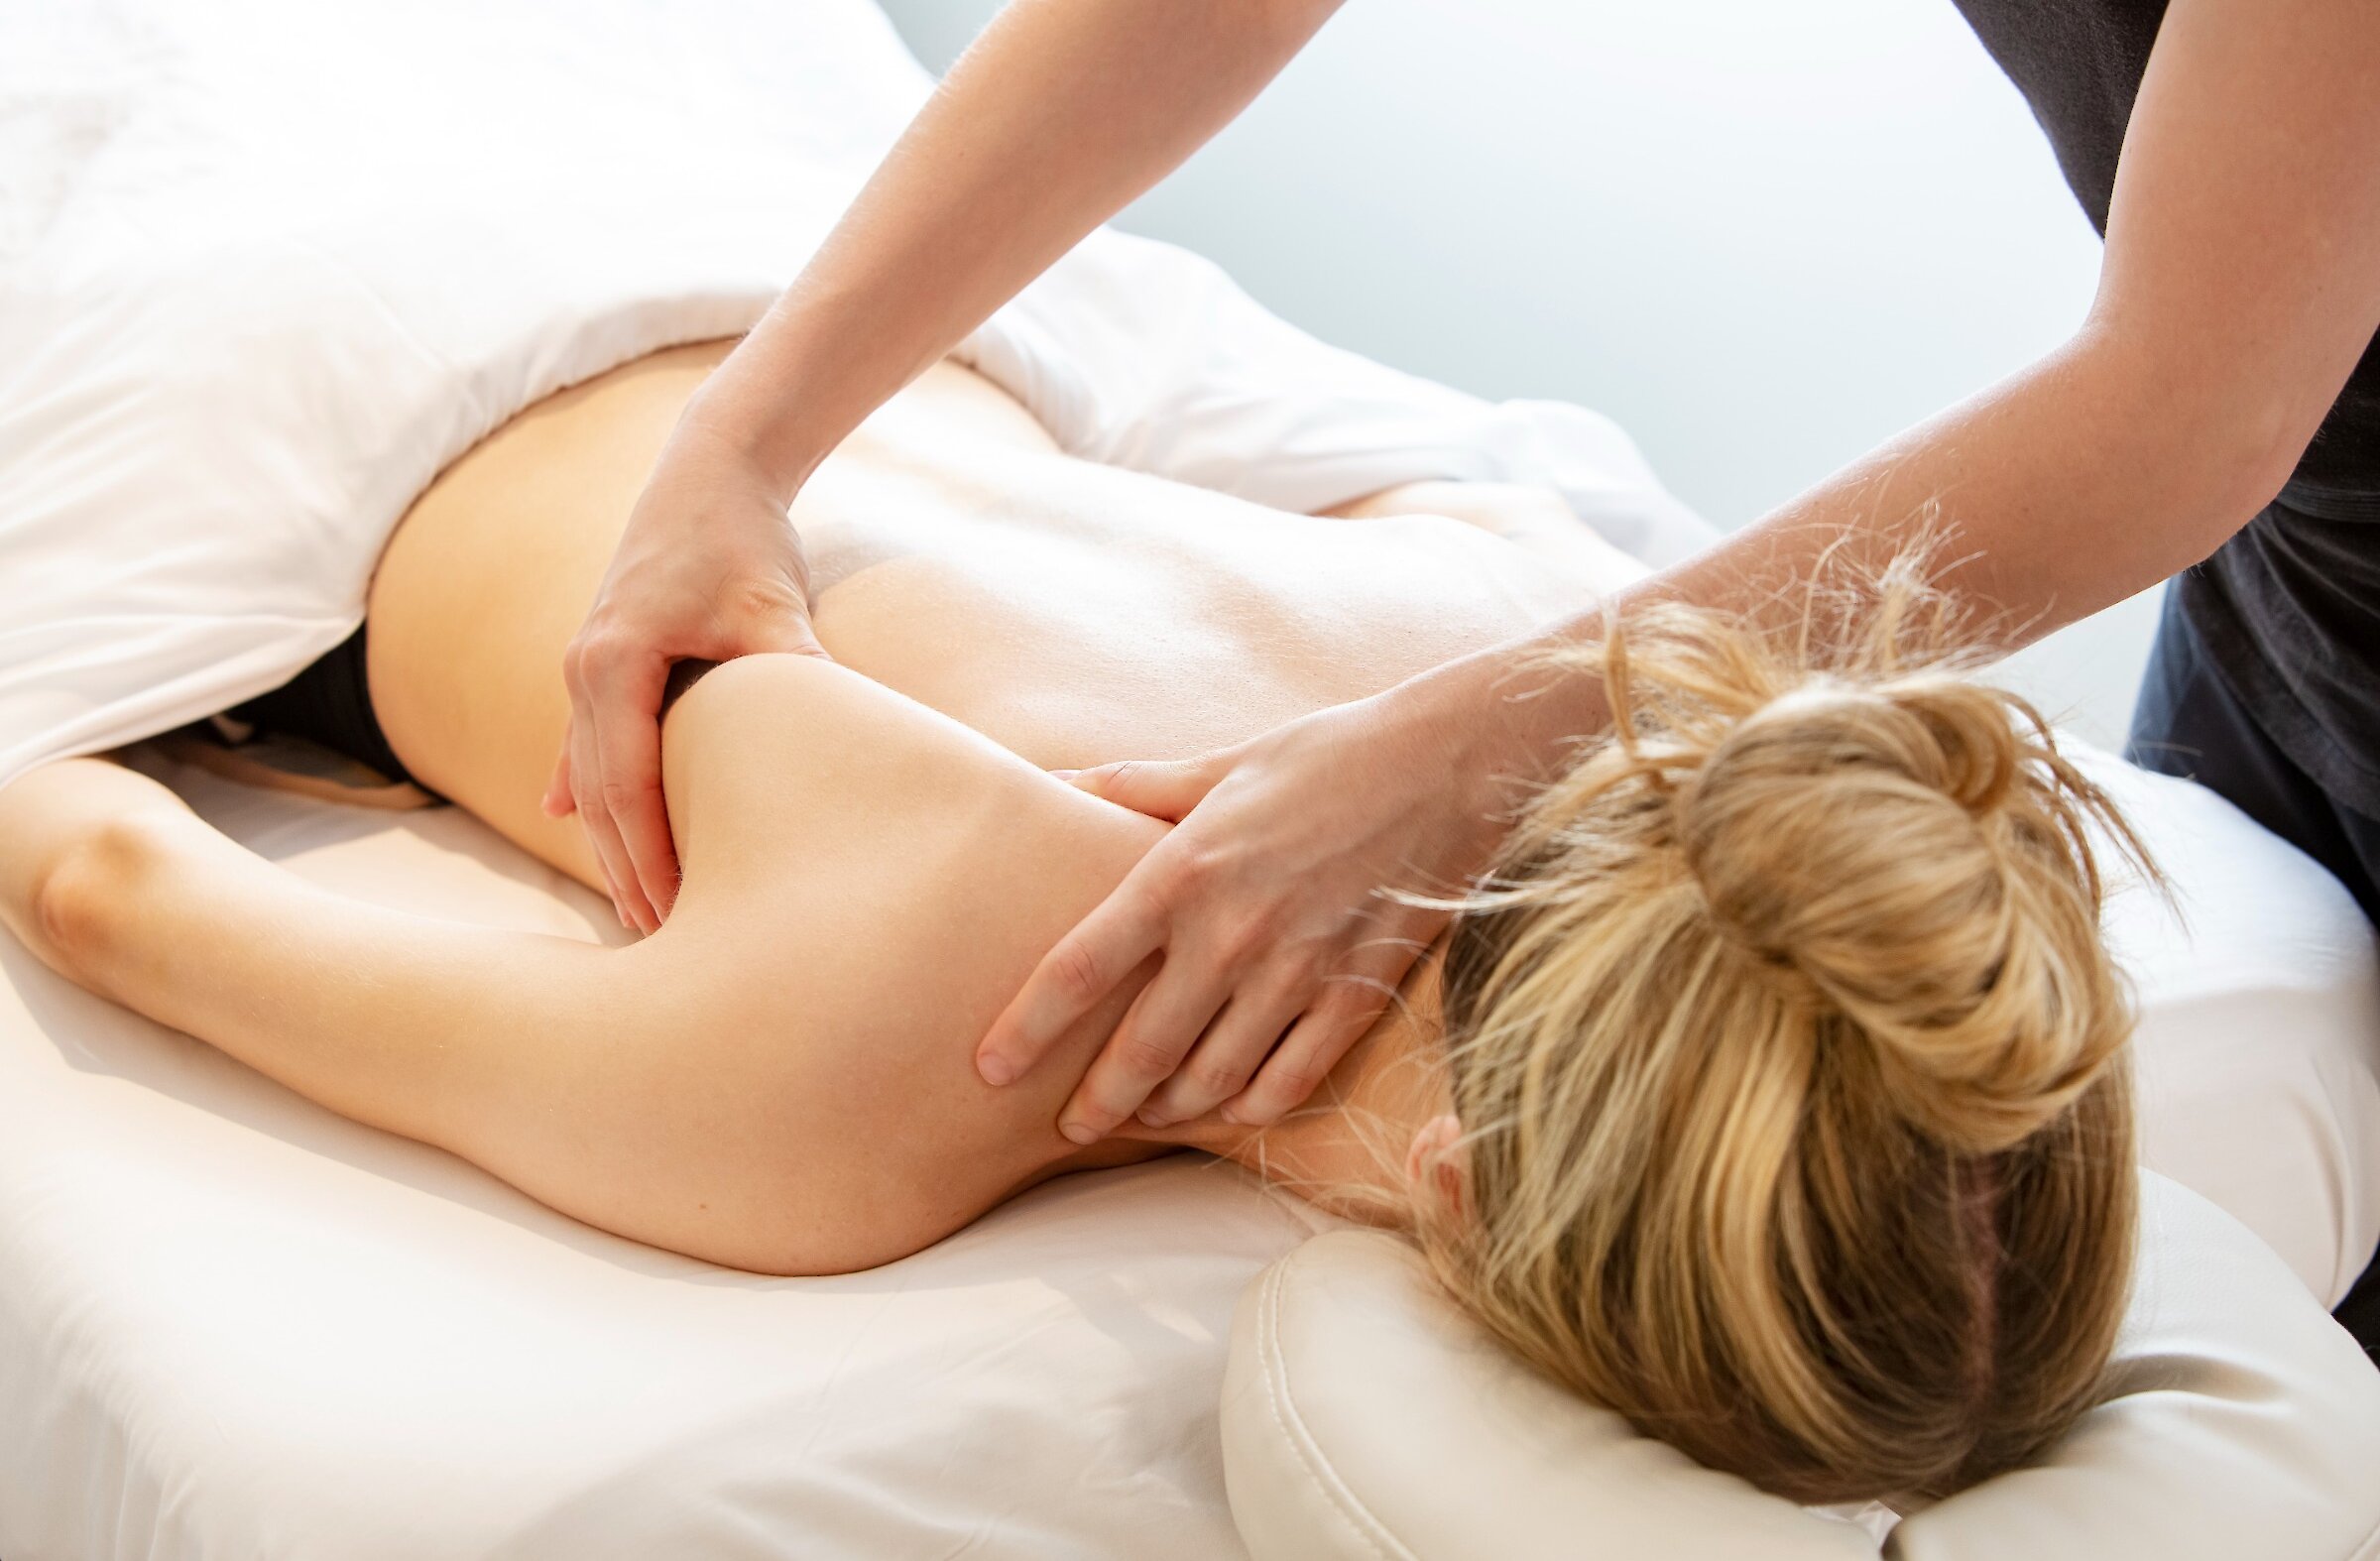 A woman gets a back massage